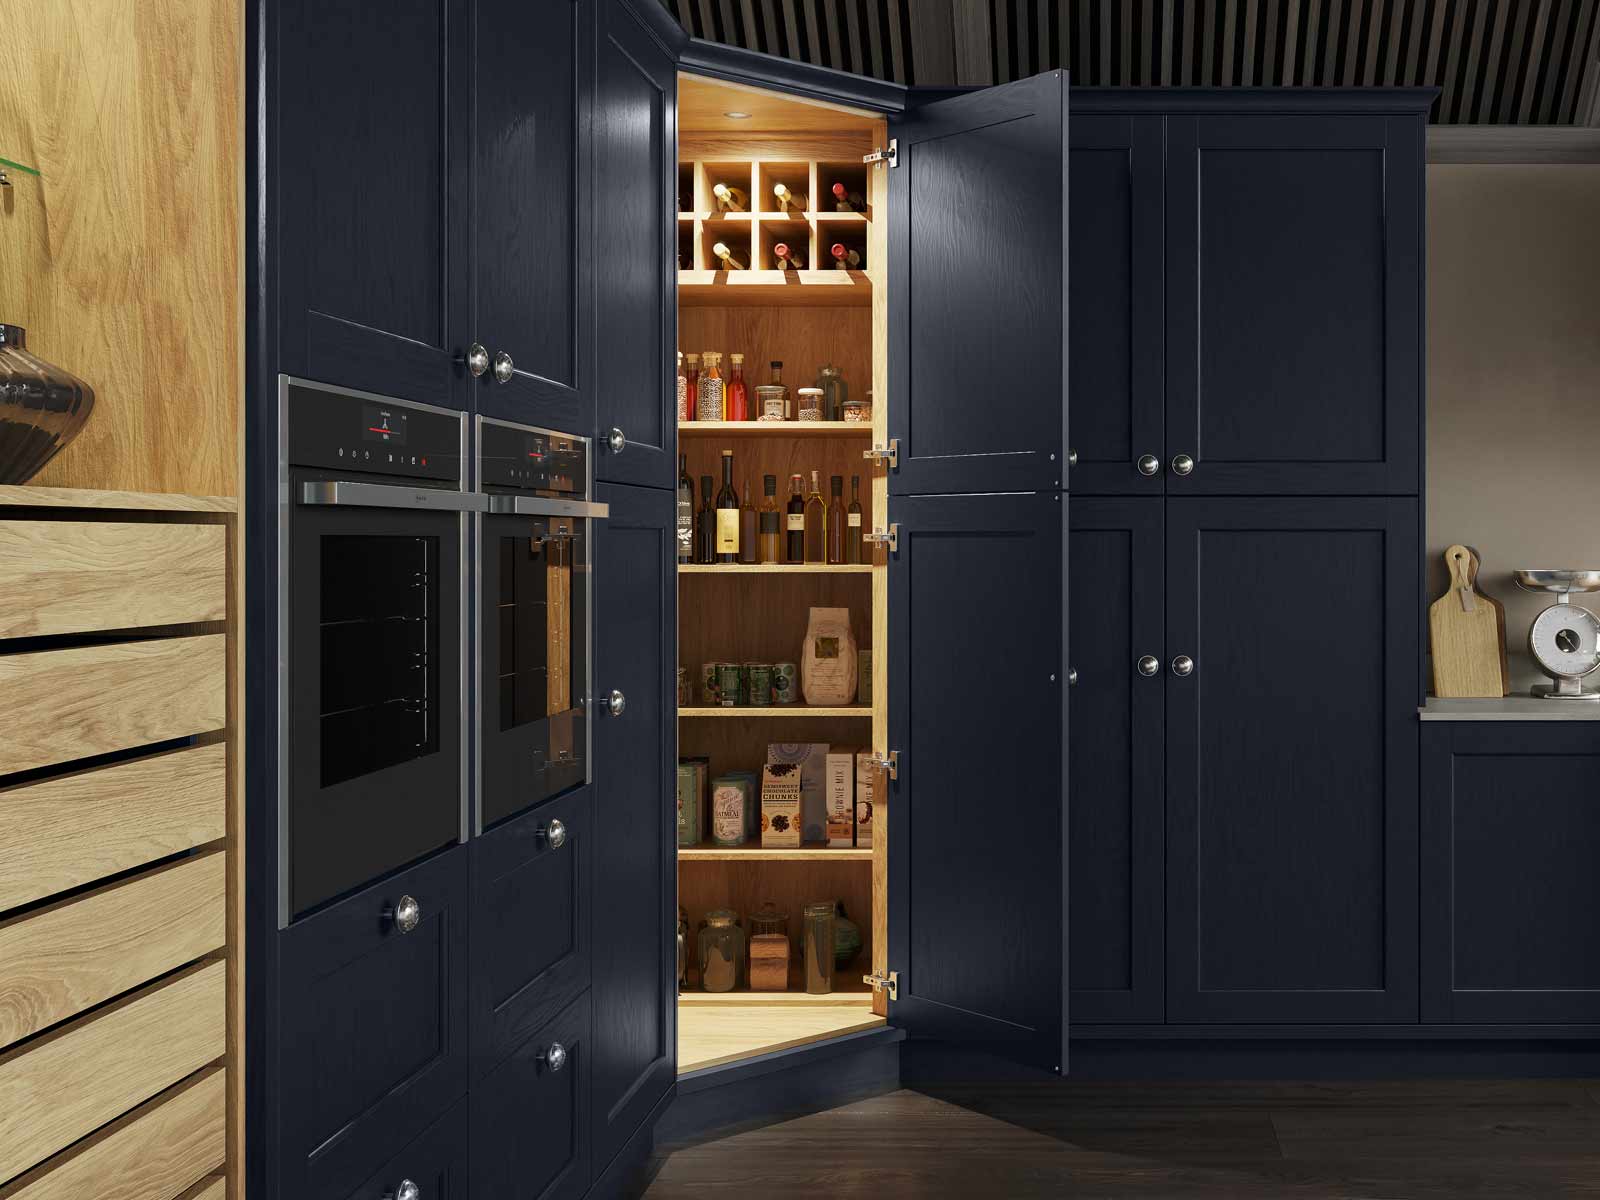 Corner kitchen pantry storage cabinets showing perfect pantry organisation